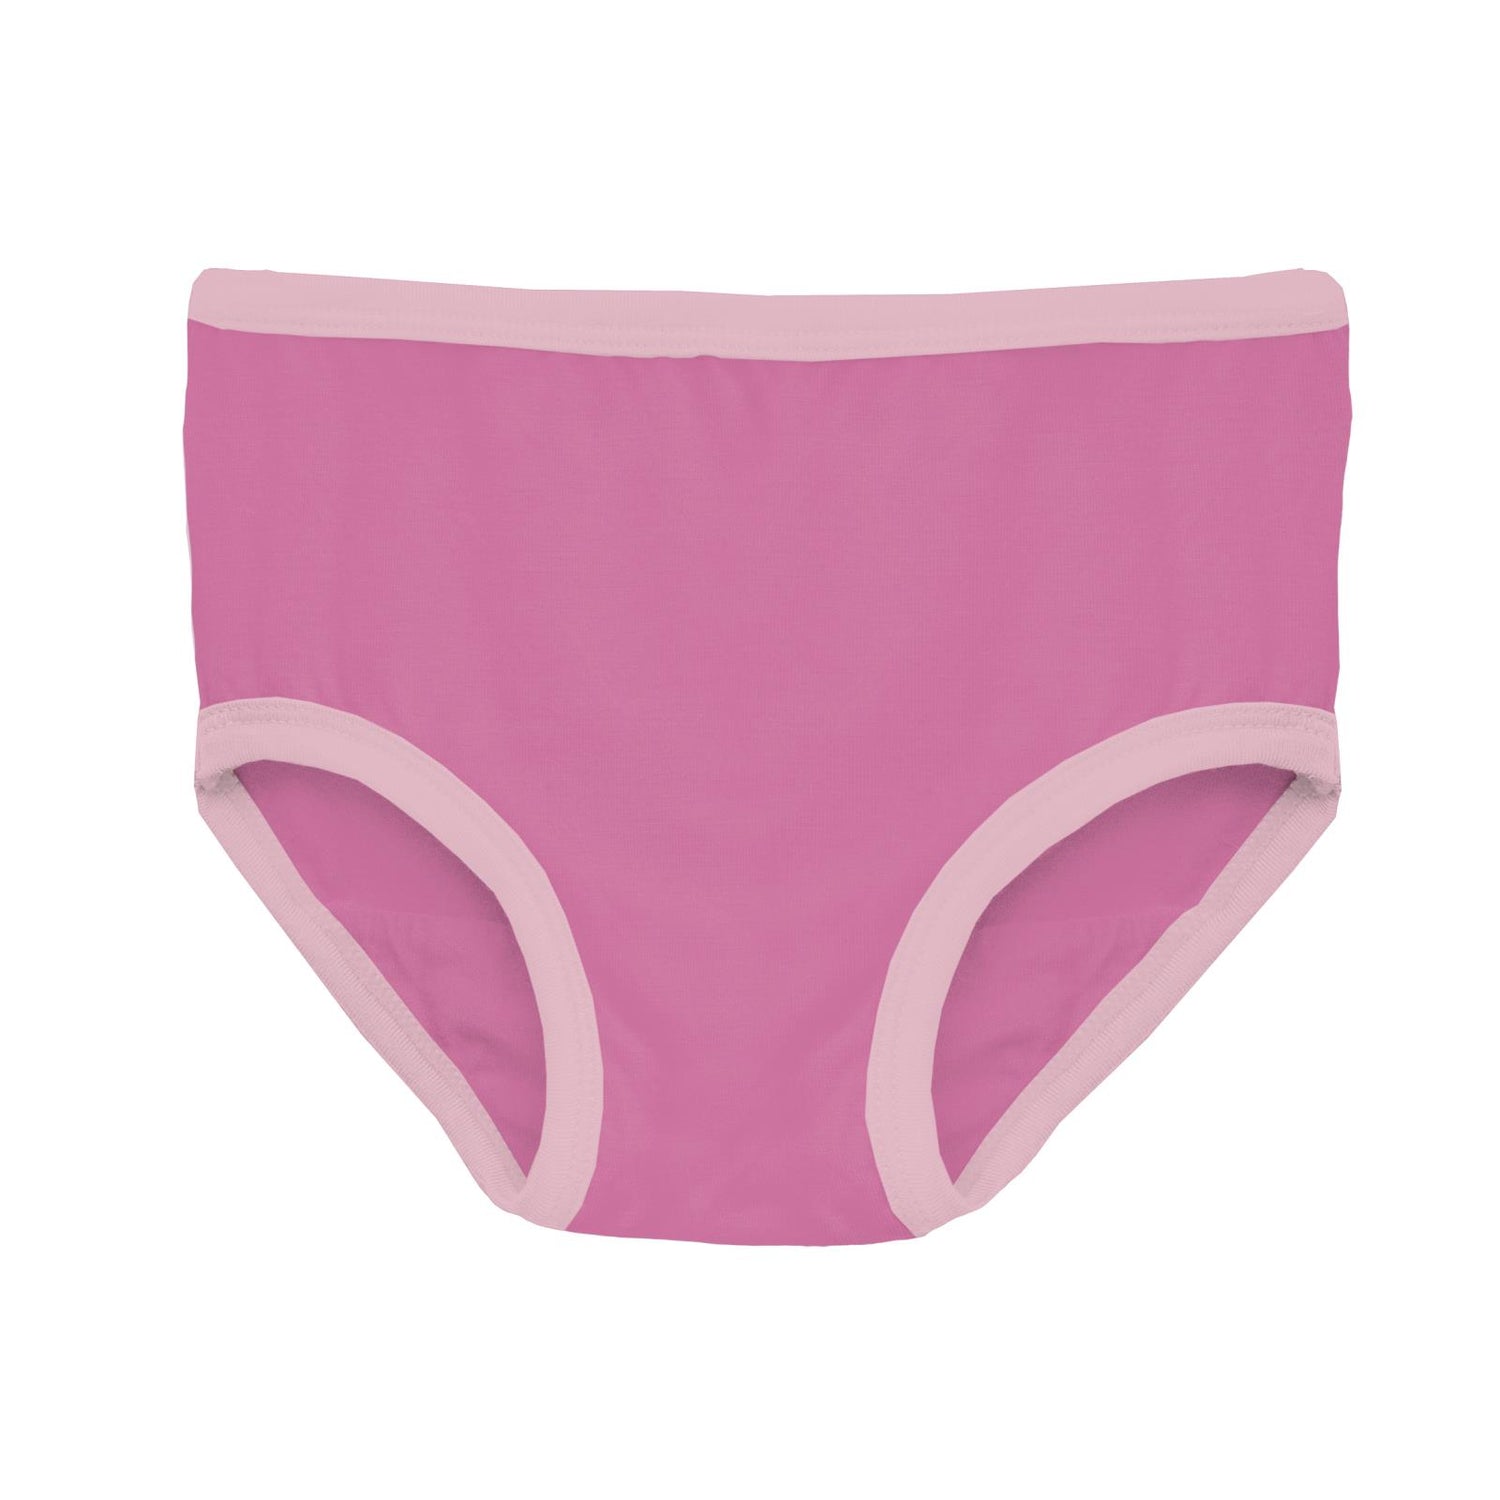 Print Girl's Underwear Set of 3 in Cake Pop Tea Party, Tulip & Natural Axolotl Party